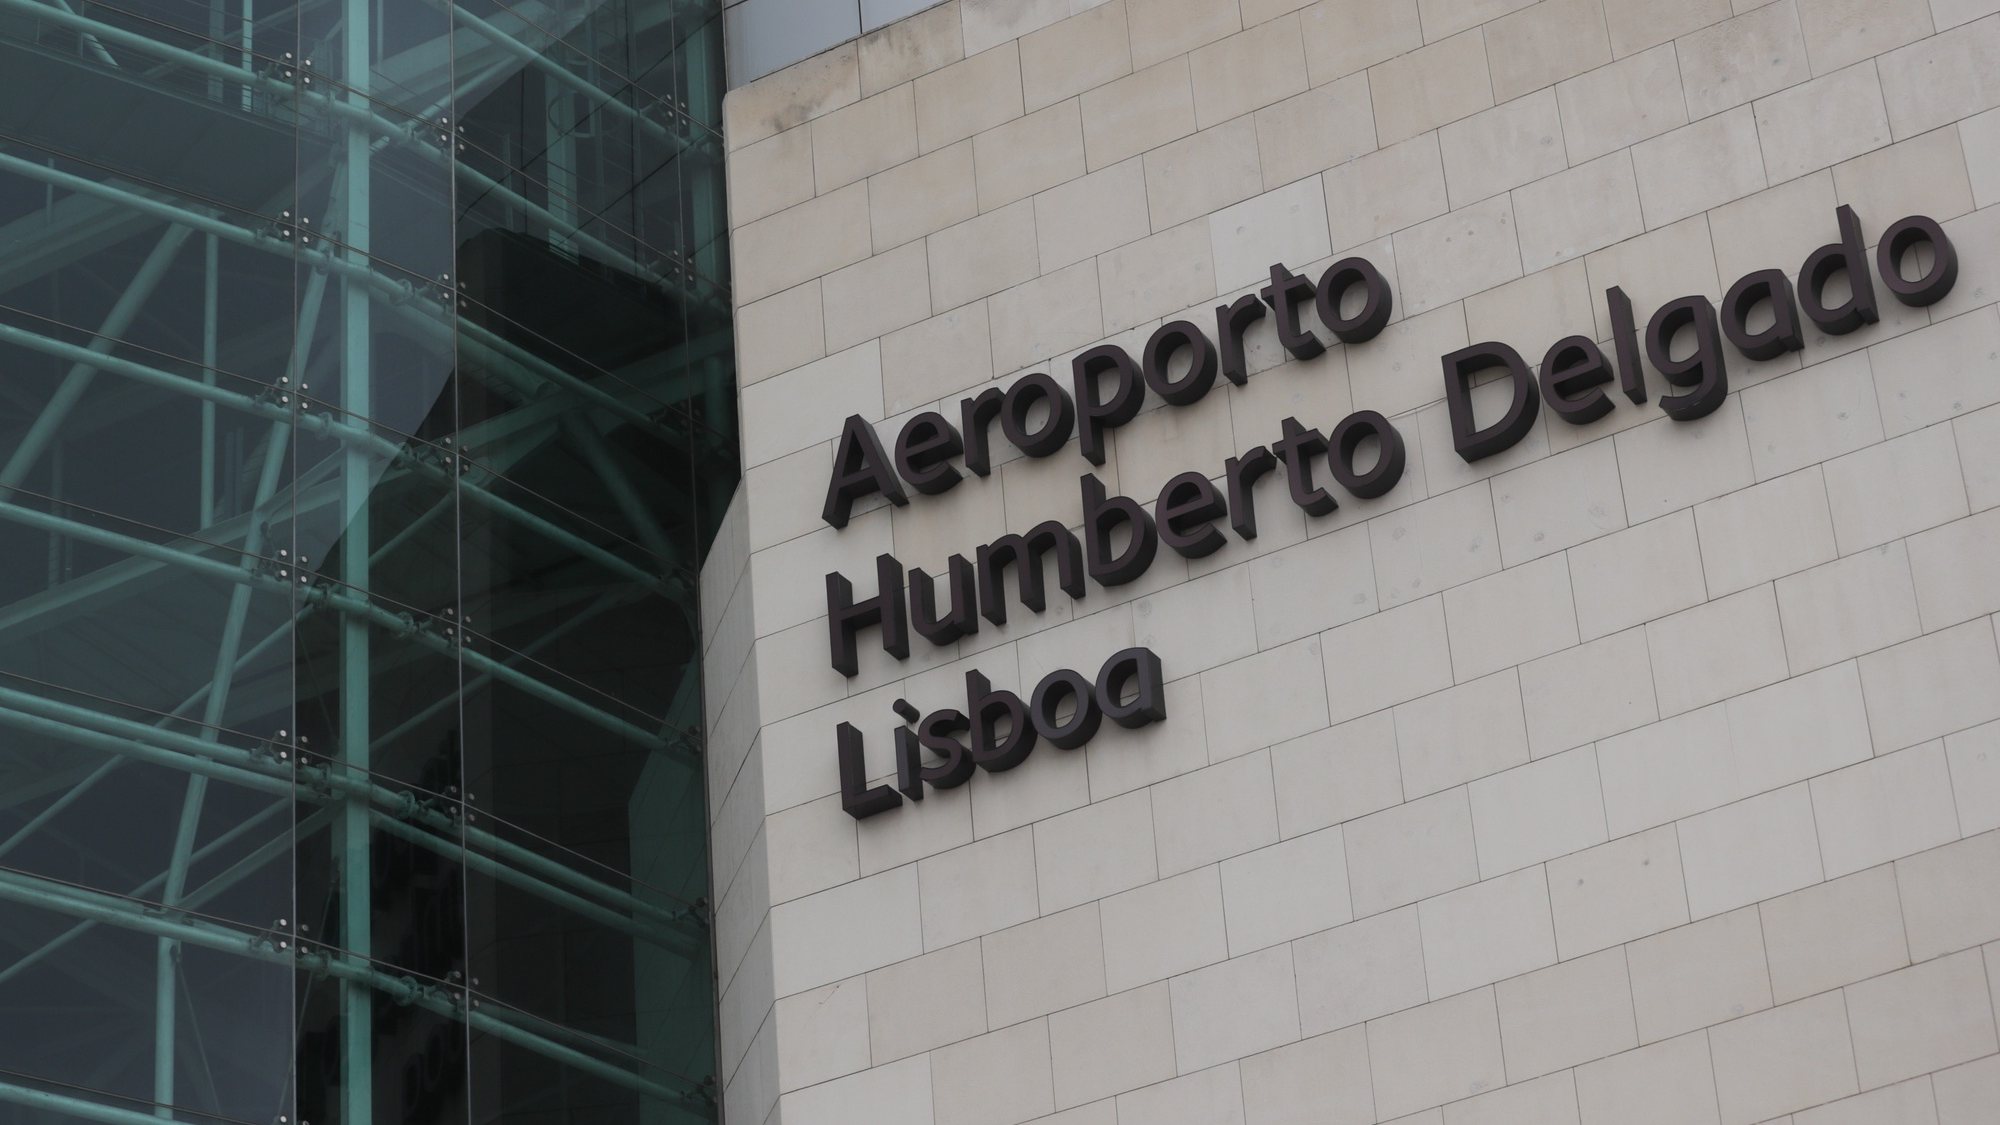 Fachada com logotipo do Aeroporto Humberto Delgado em Lisboa, 08 de novembro de 2021. TIAGO PETINGA/LUSA